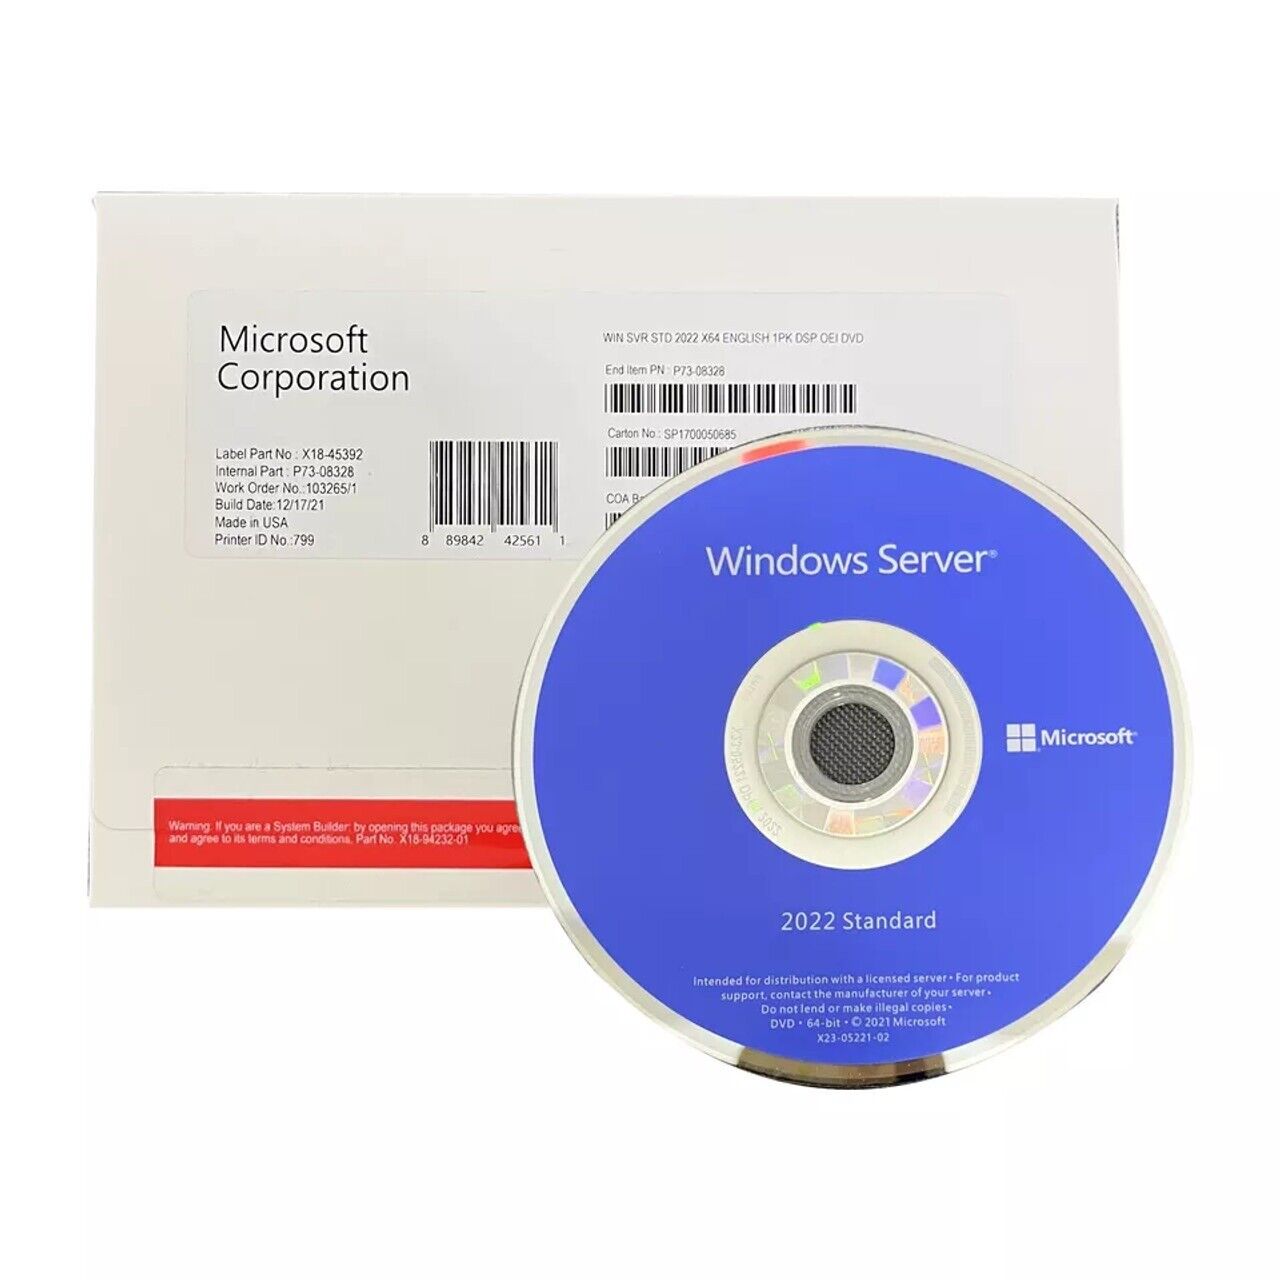 New Microsoft Windows Server 2022 Standard 64-bit 16 Core DVD & License sealed